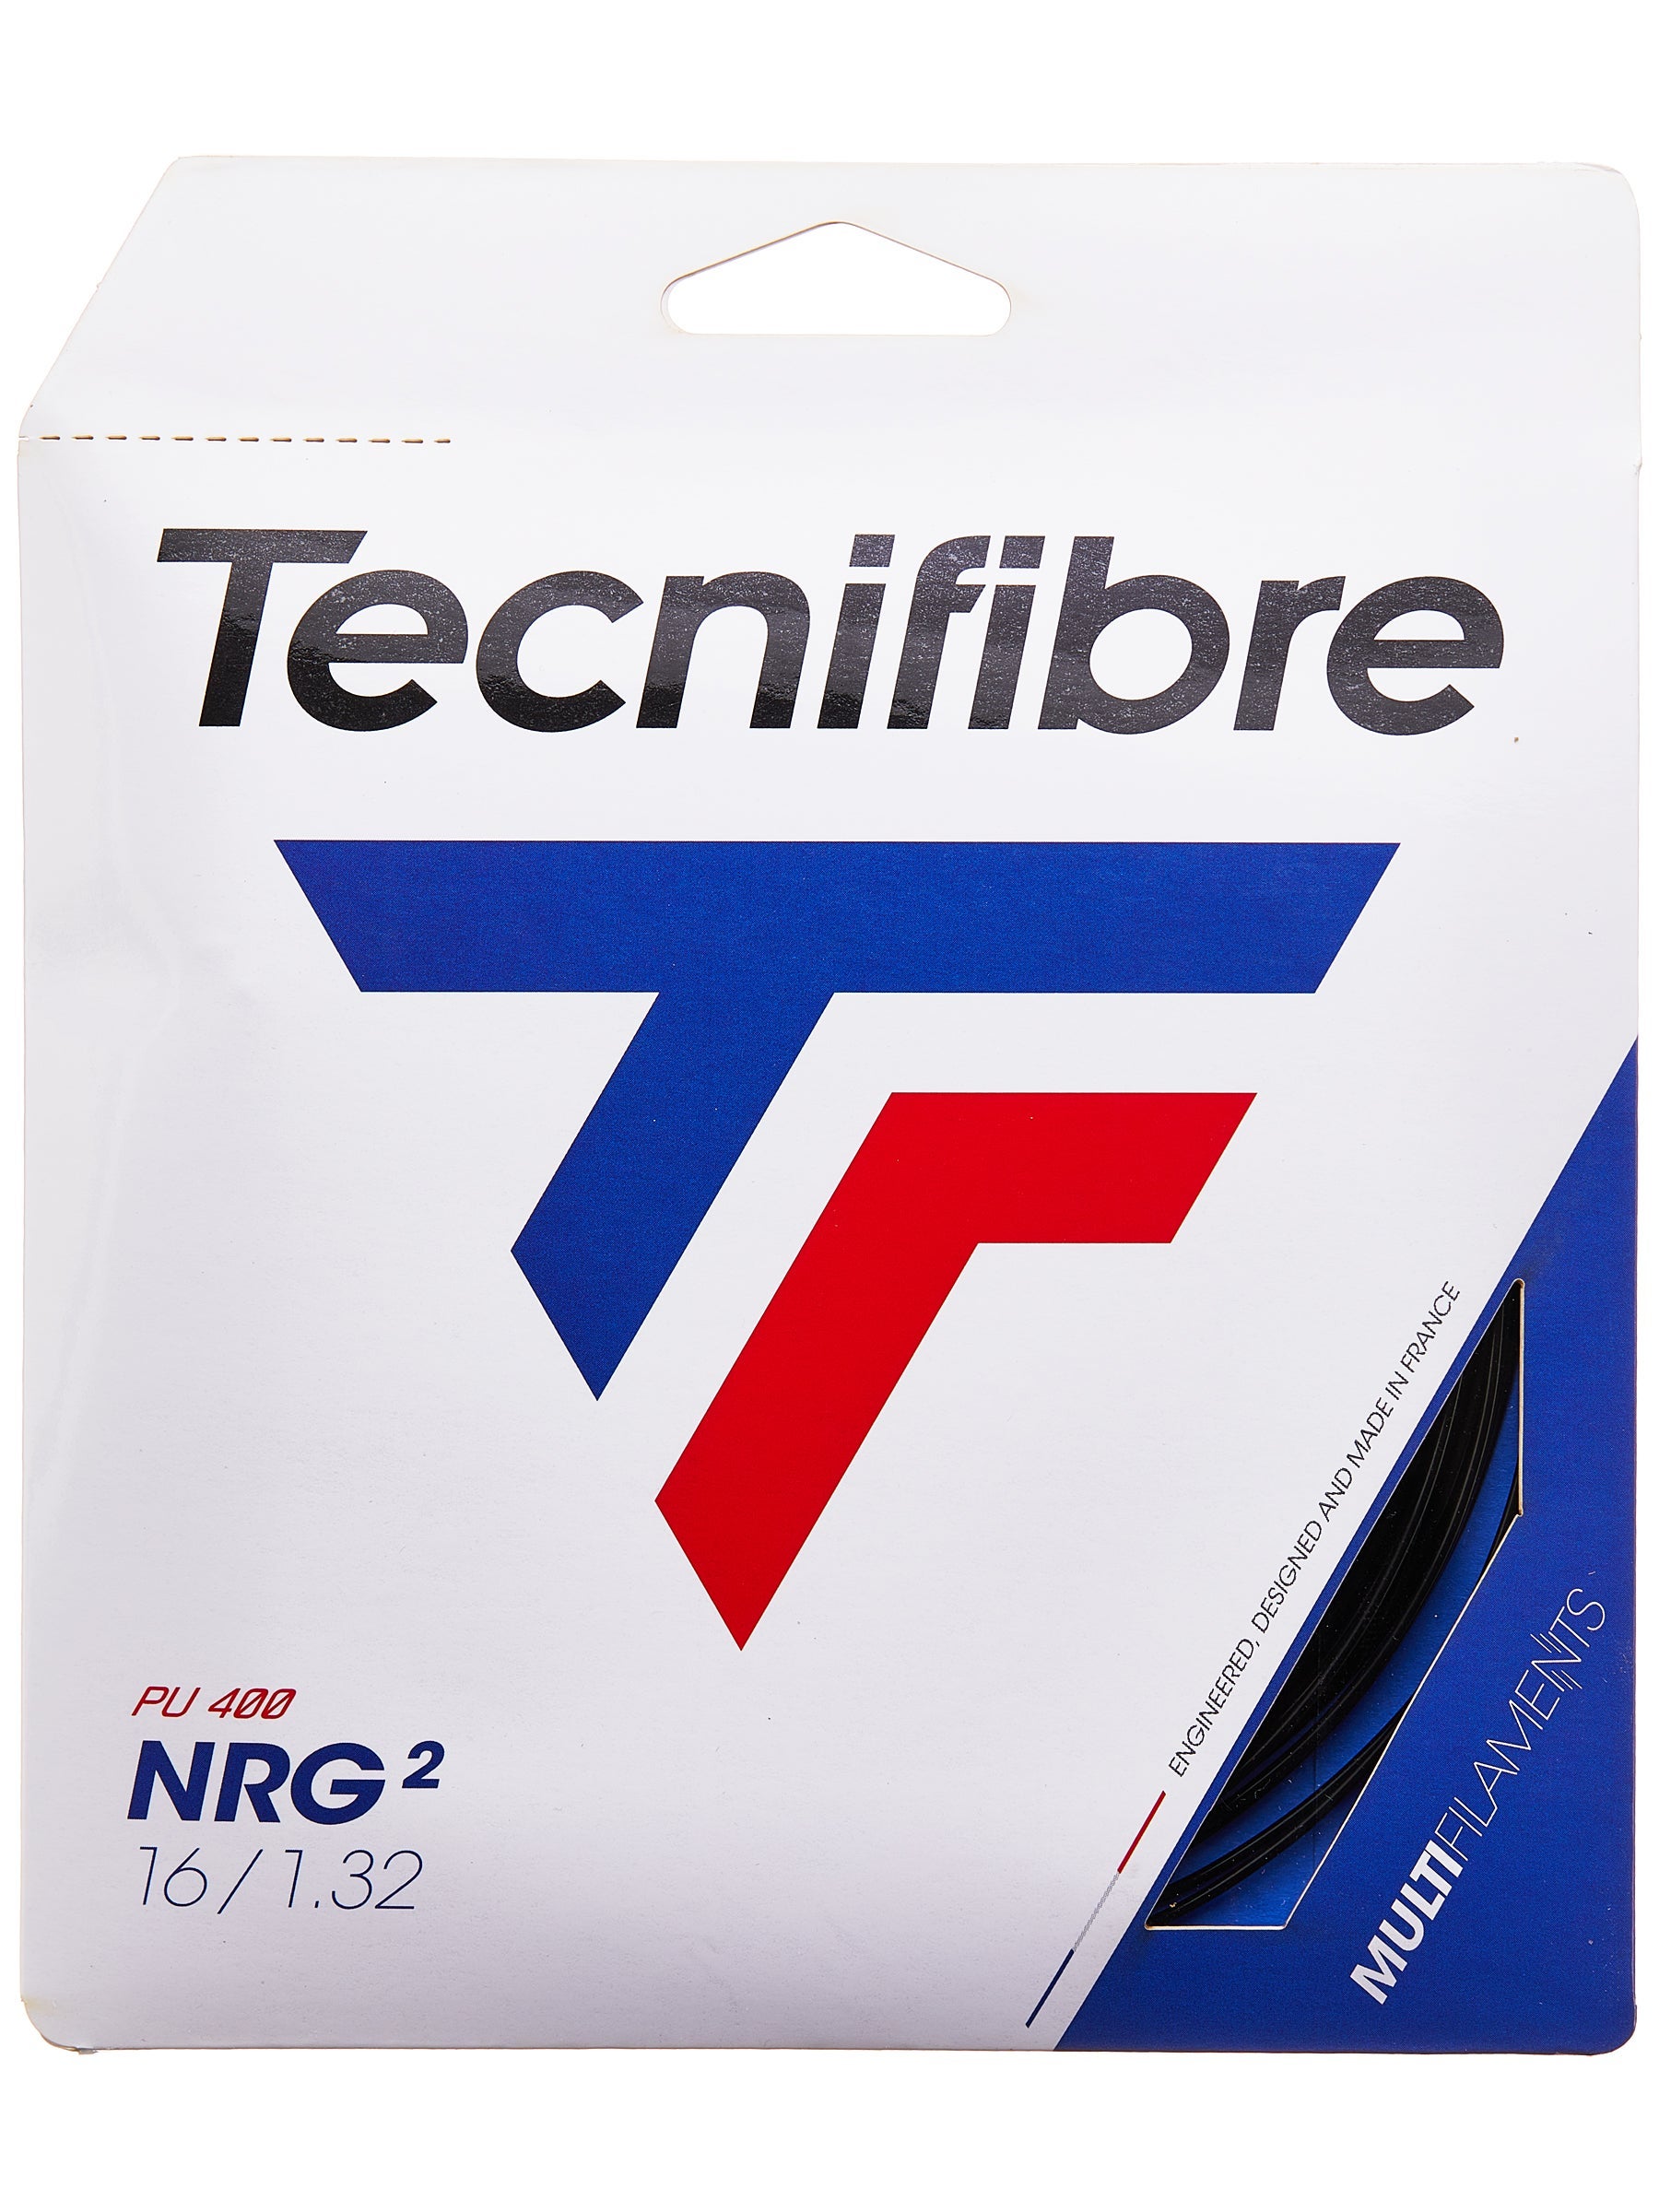 Tecnifibre NRG2 Tennis String 